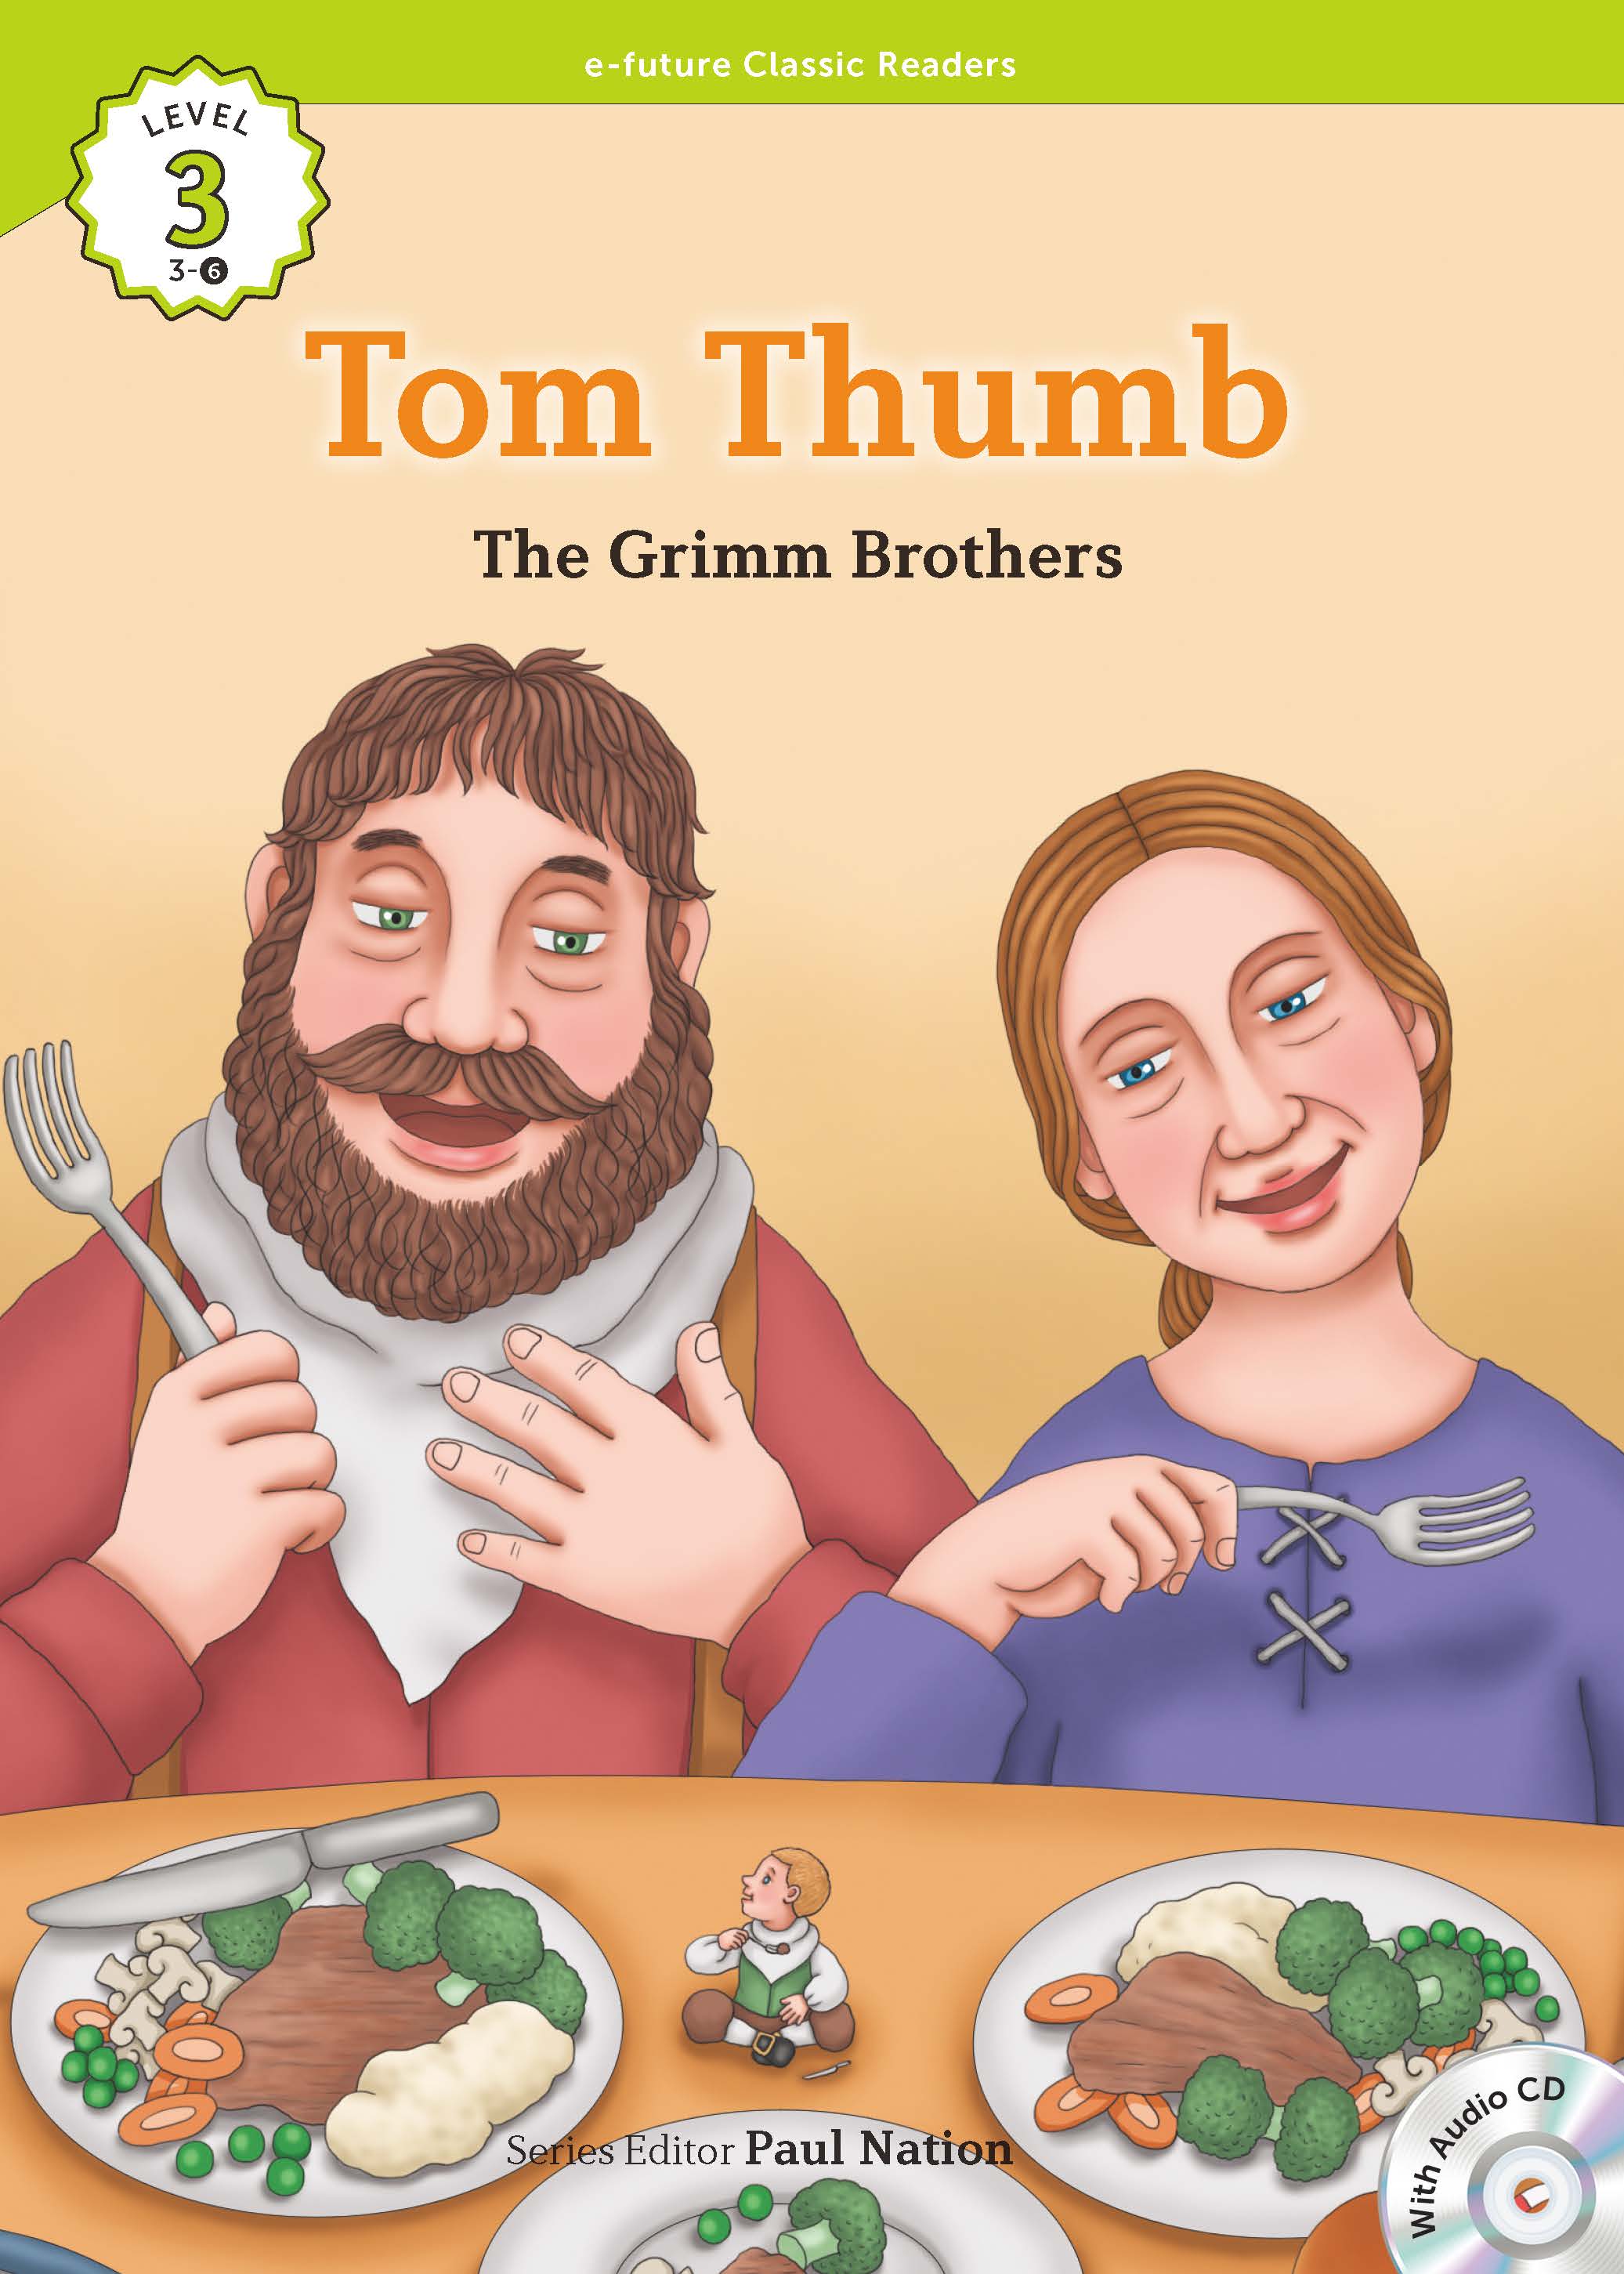 Tom Reader. About Grimms brothers. Tom thumb сказка. Братья Гримм большой палец. Аудиокнига братья гримм